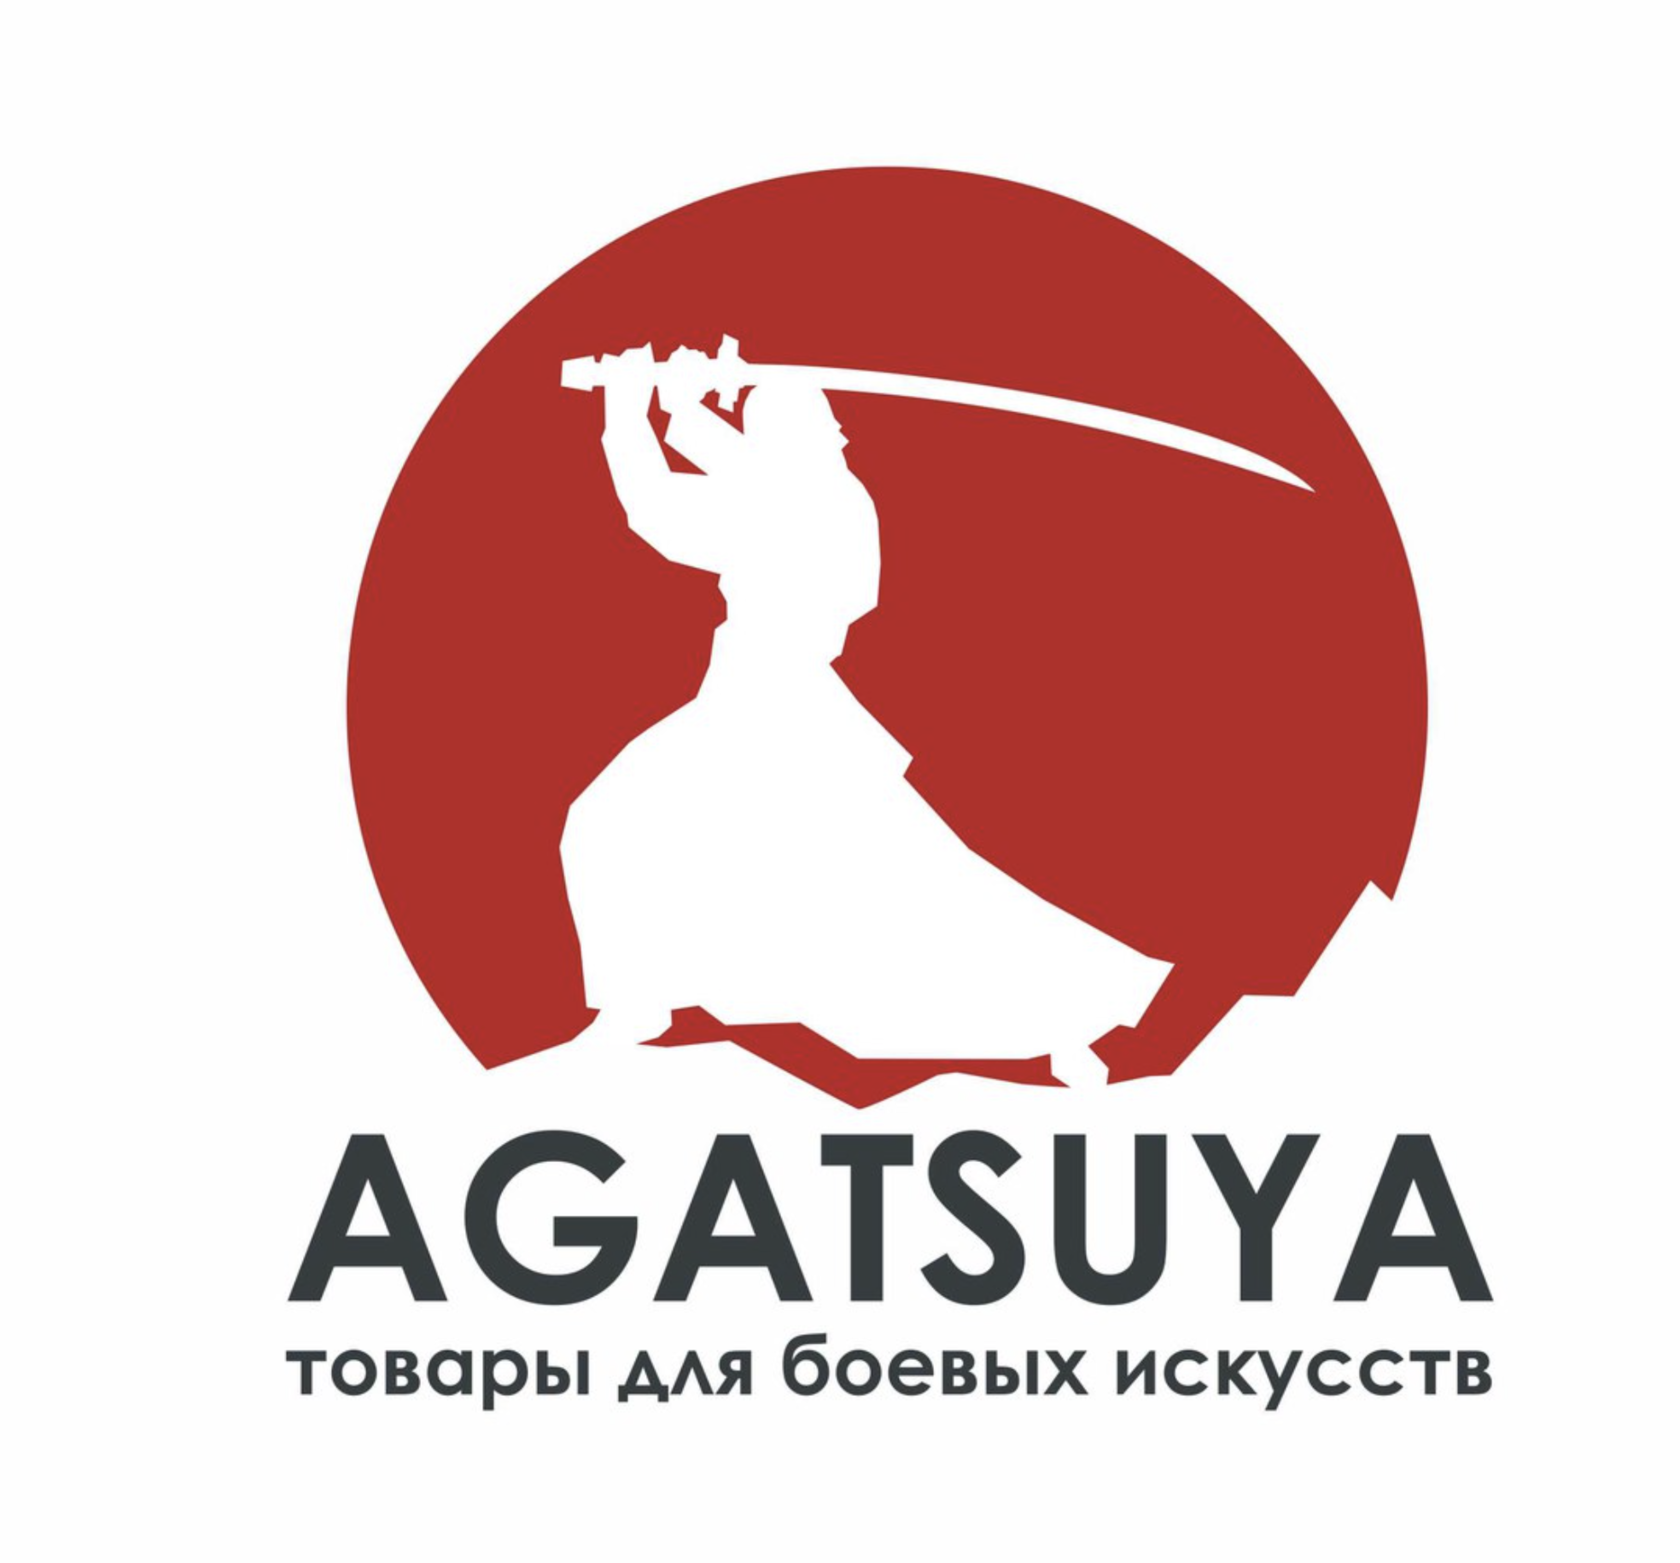 Agatsuya - онлайн магазин ЦКС "Агацукан"